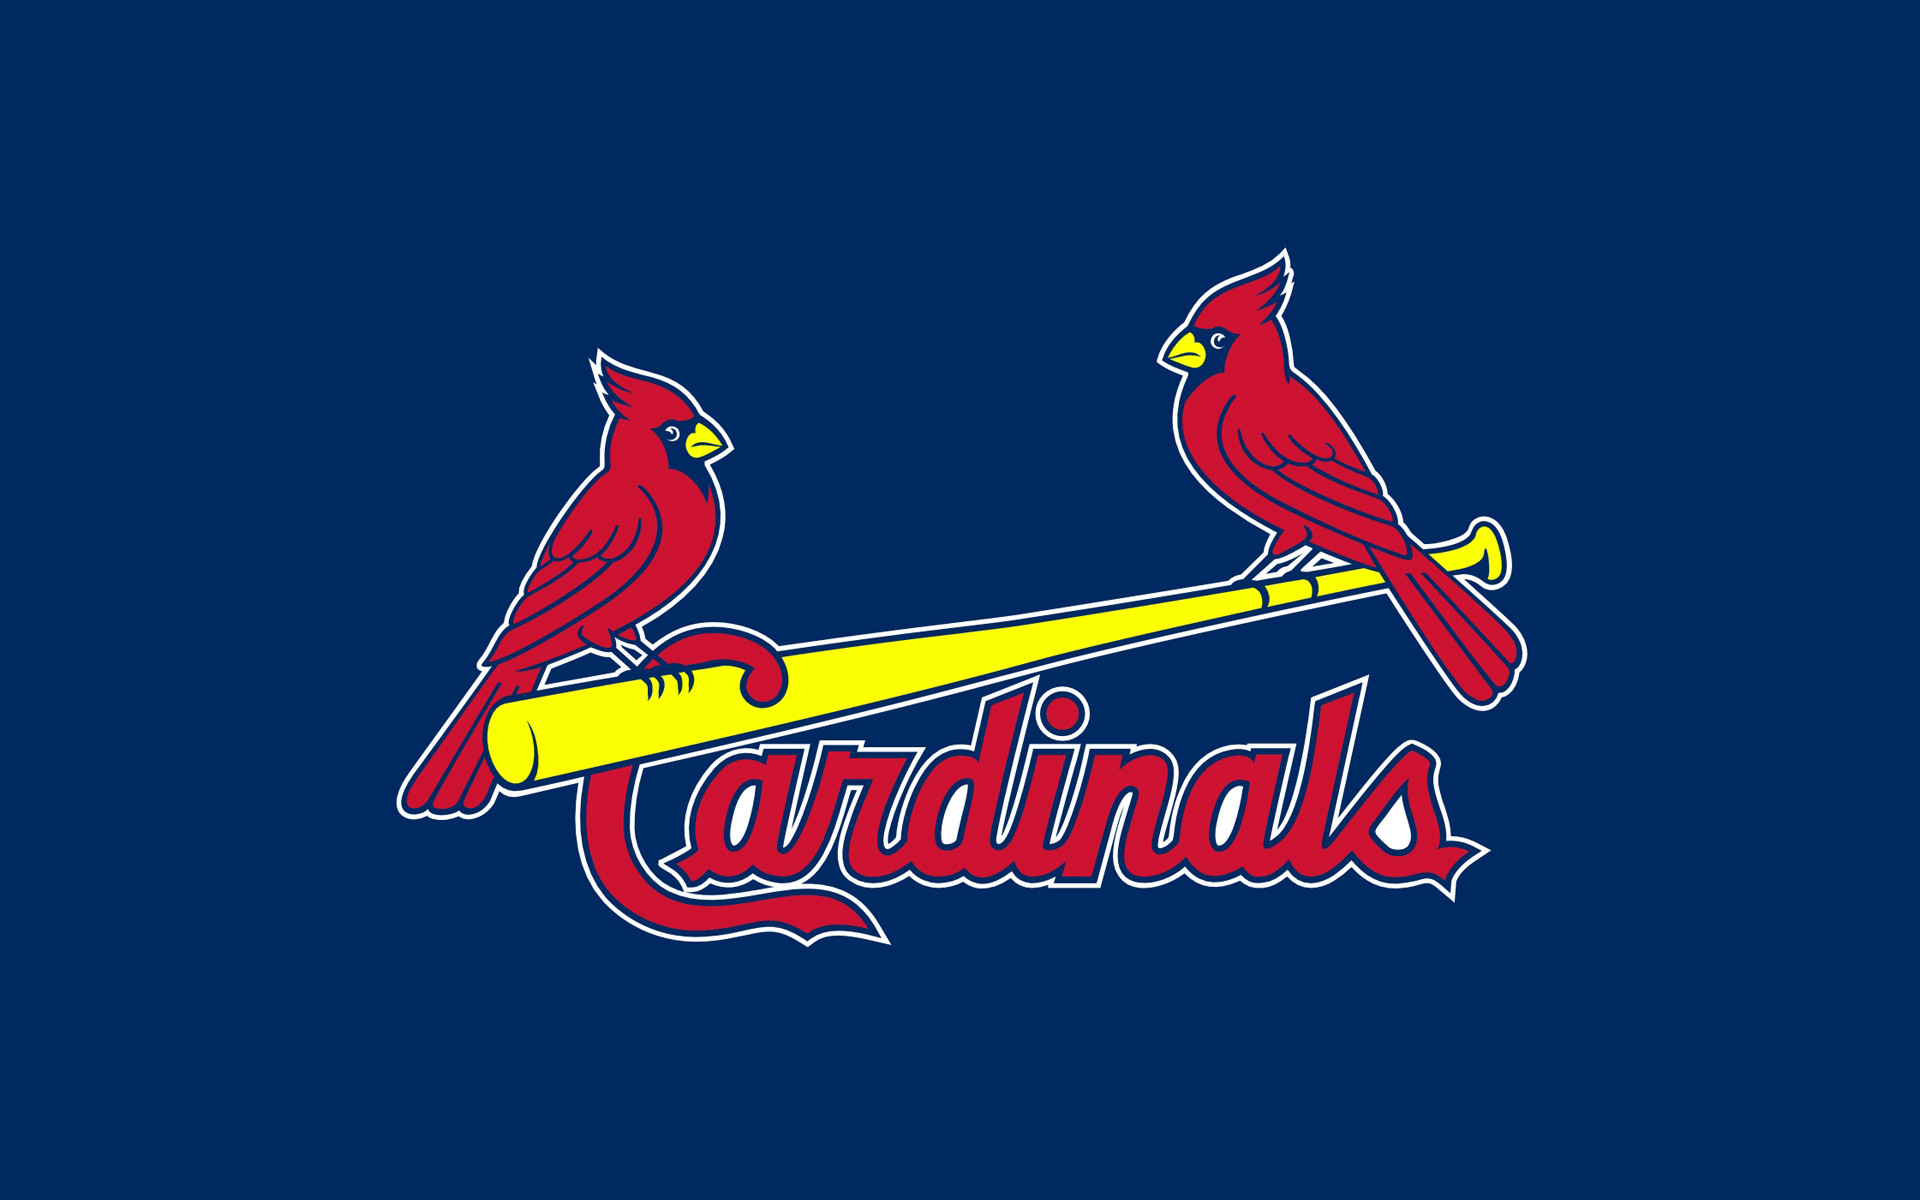 Colorado Rockies vs St Louis Cardinals MLB Betting Matchup Preview & Odds  5-17-